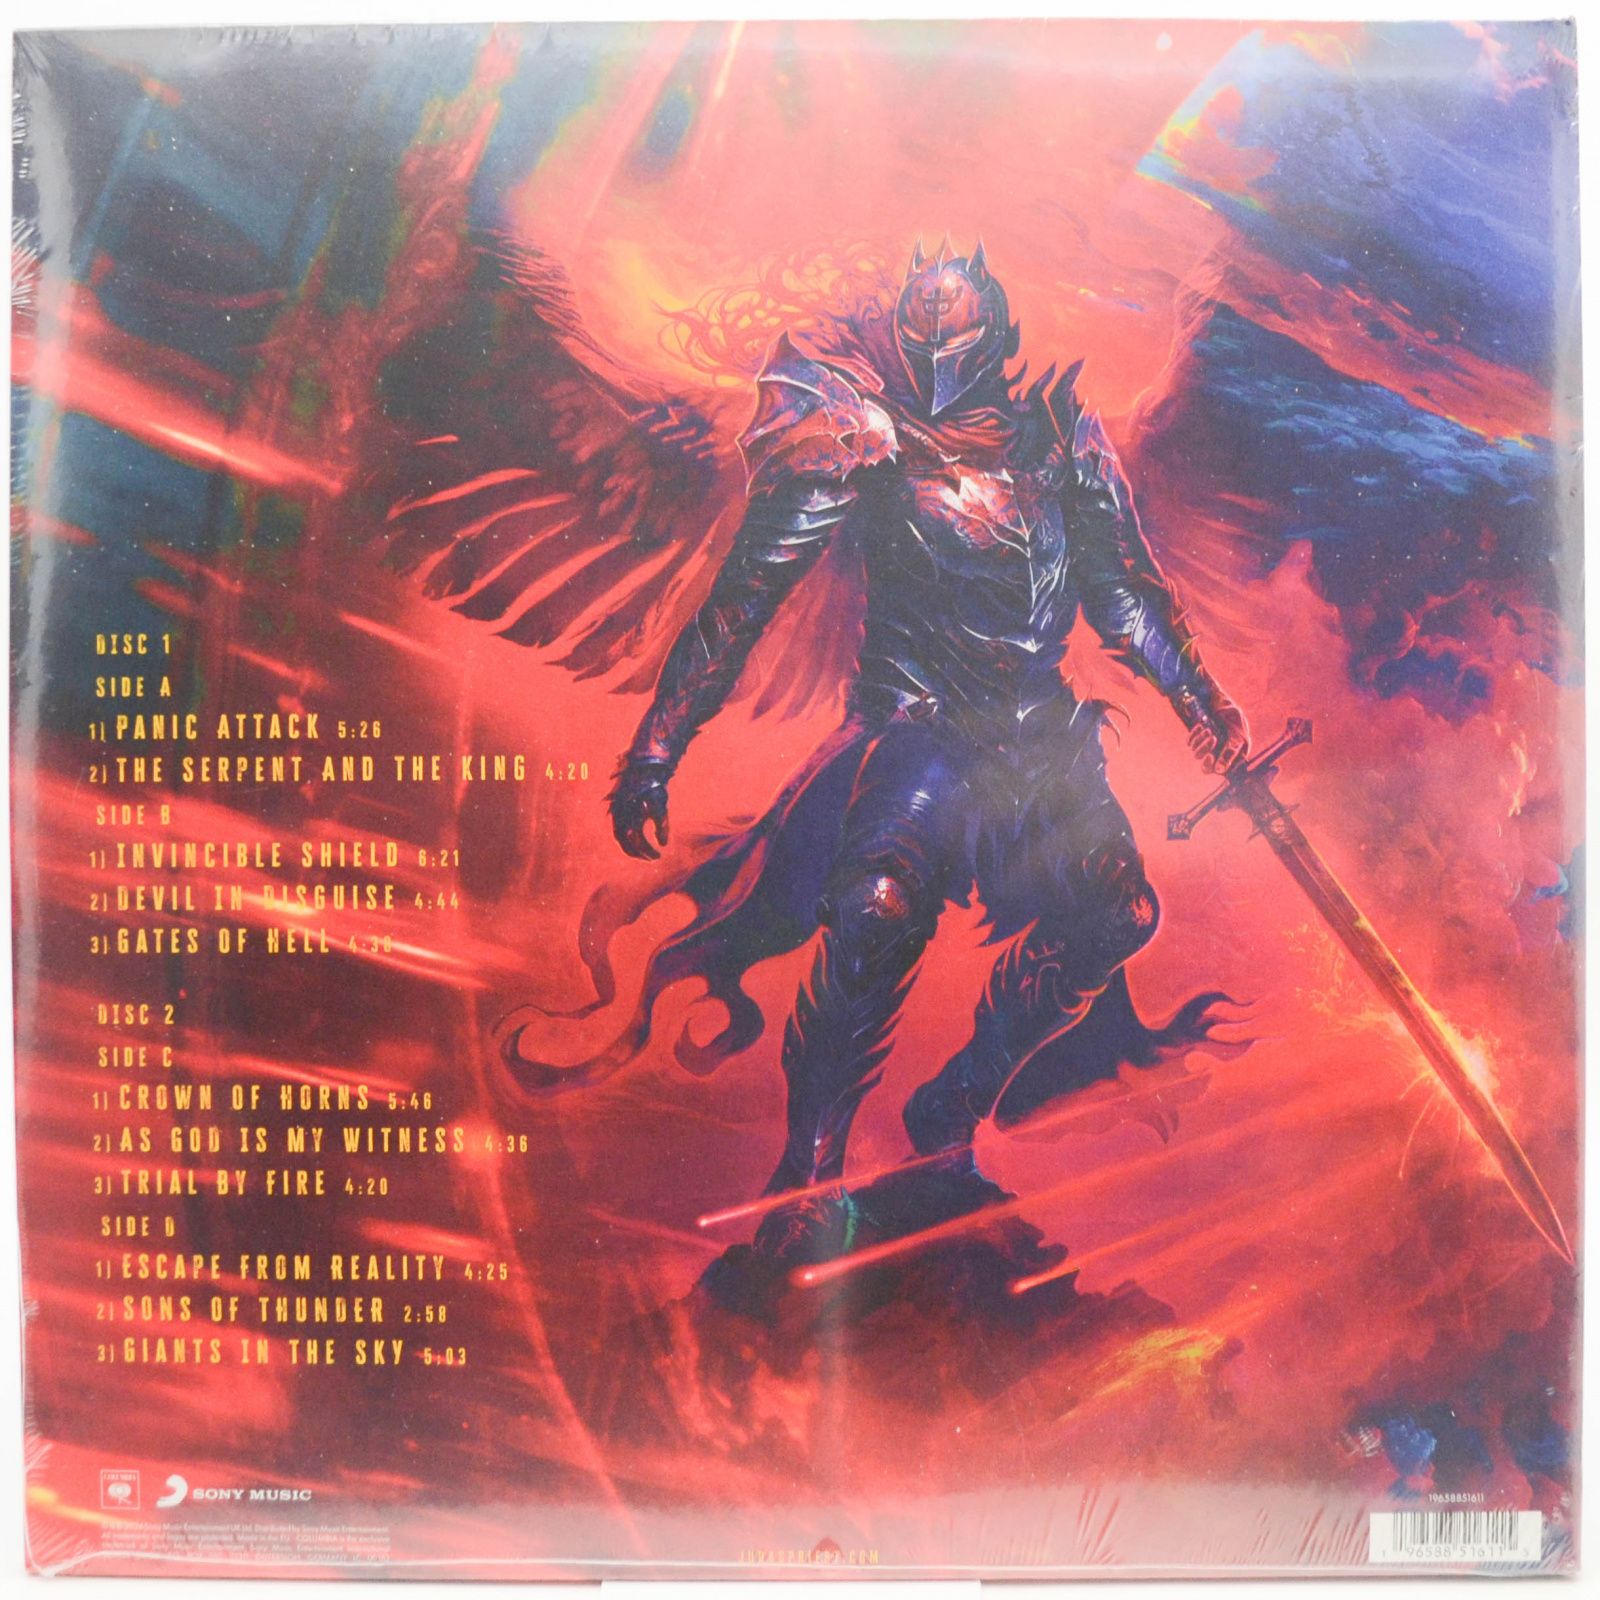 Judas Priest — Invincible Shield (2LP), 2024